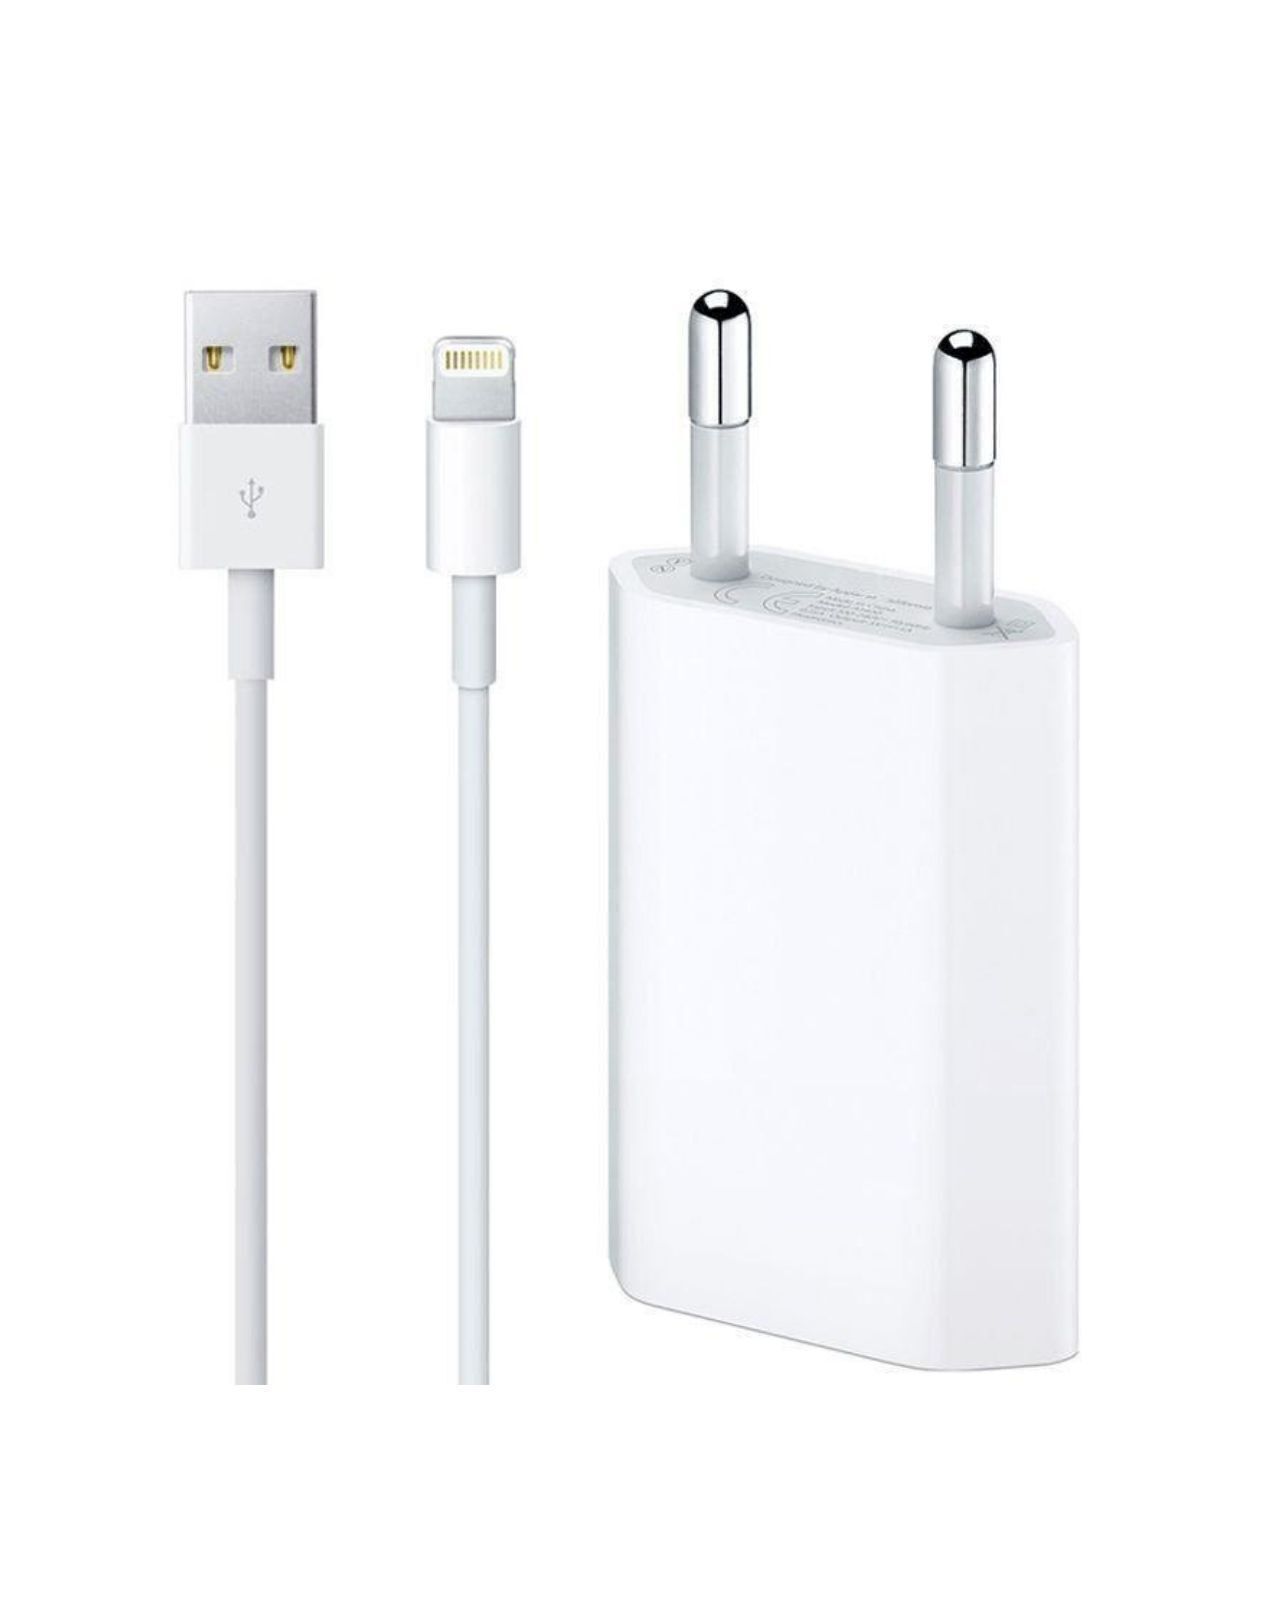 Купить зарядку эпл. Сетевая зарядка Apple md813zm/a. Зарядник для iphone USB. Адаптер- Apple 20w USB-C Power Adapter. Блок зарядки айфон.